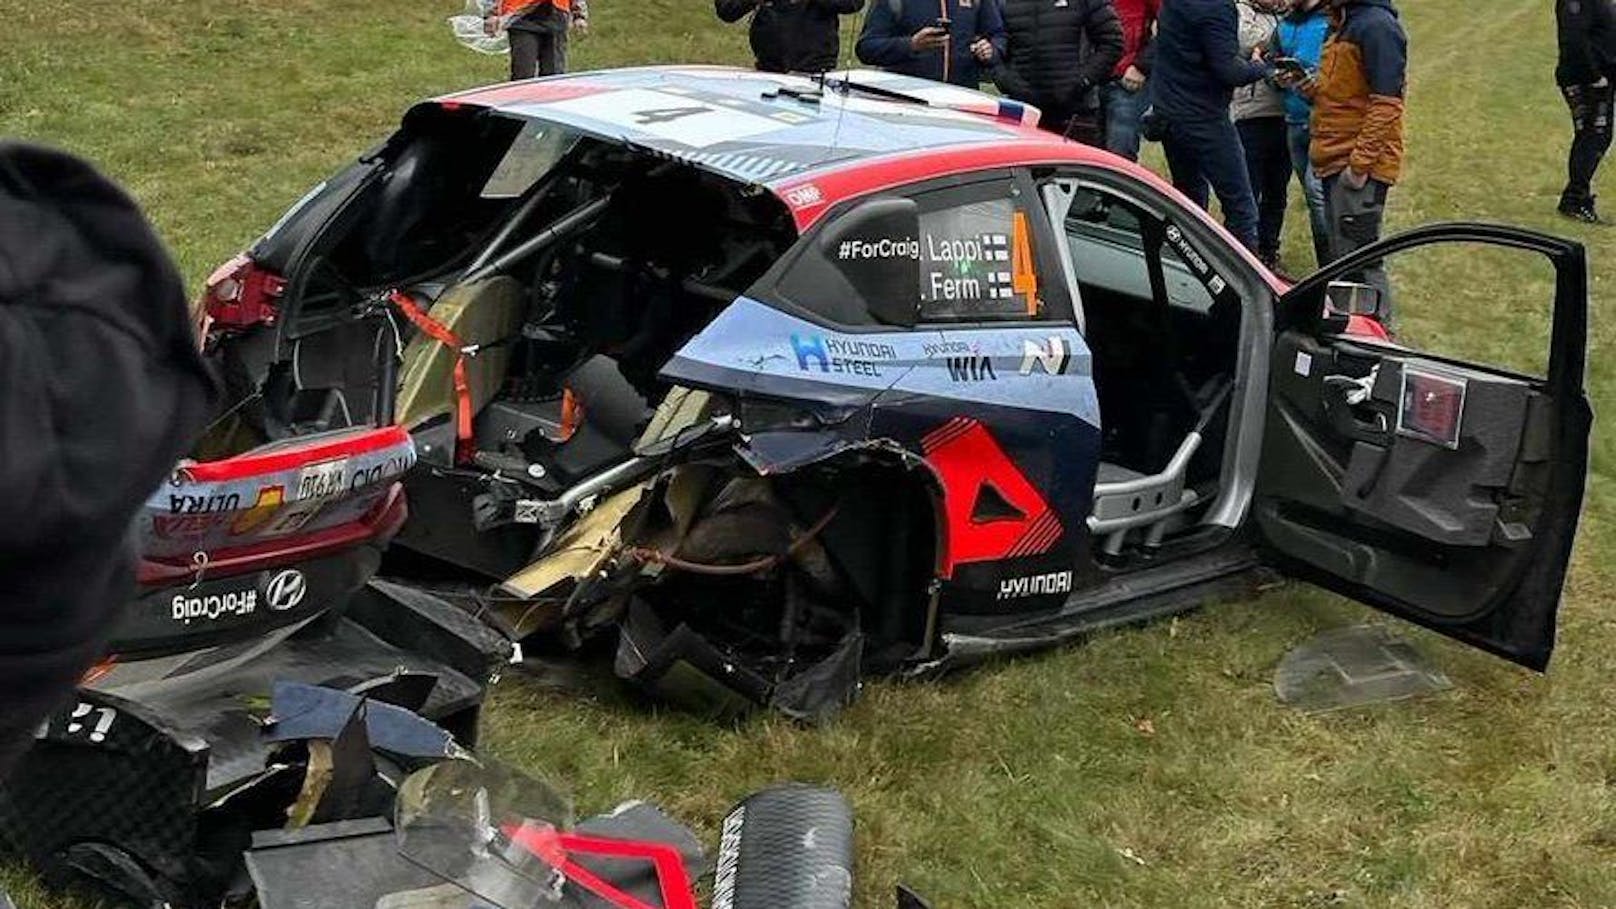 Rallye-Star crasht schwer, Etappe abgebrochen